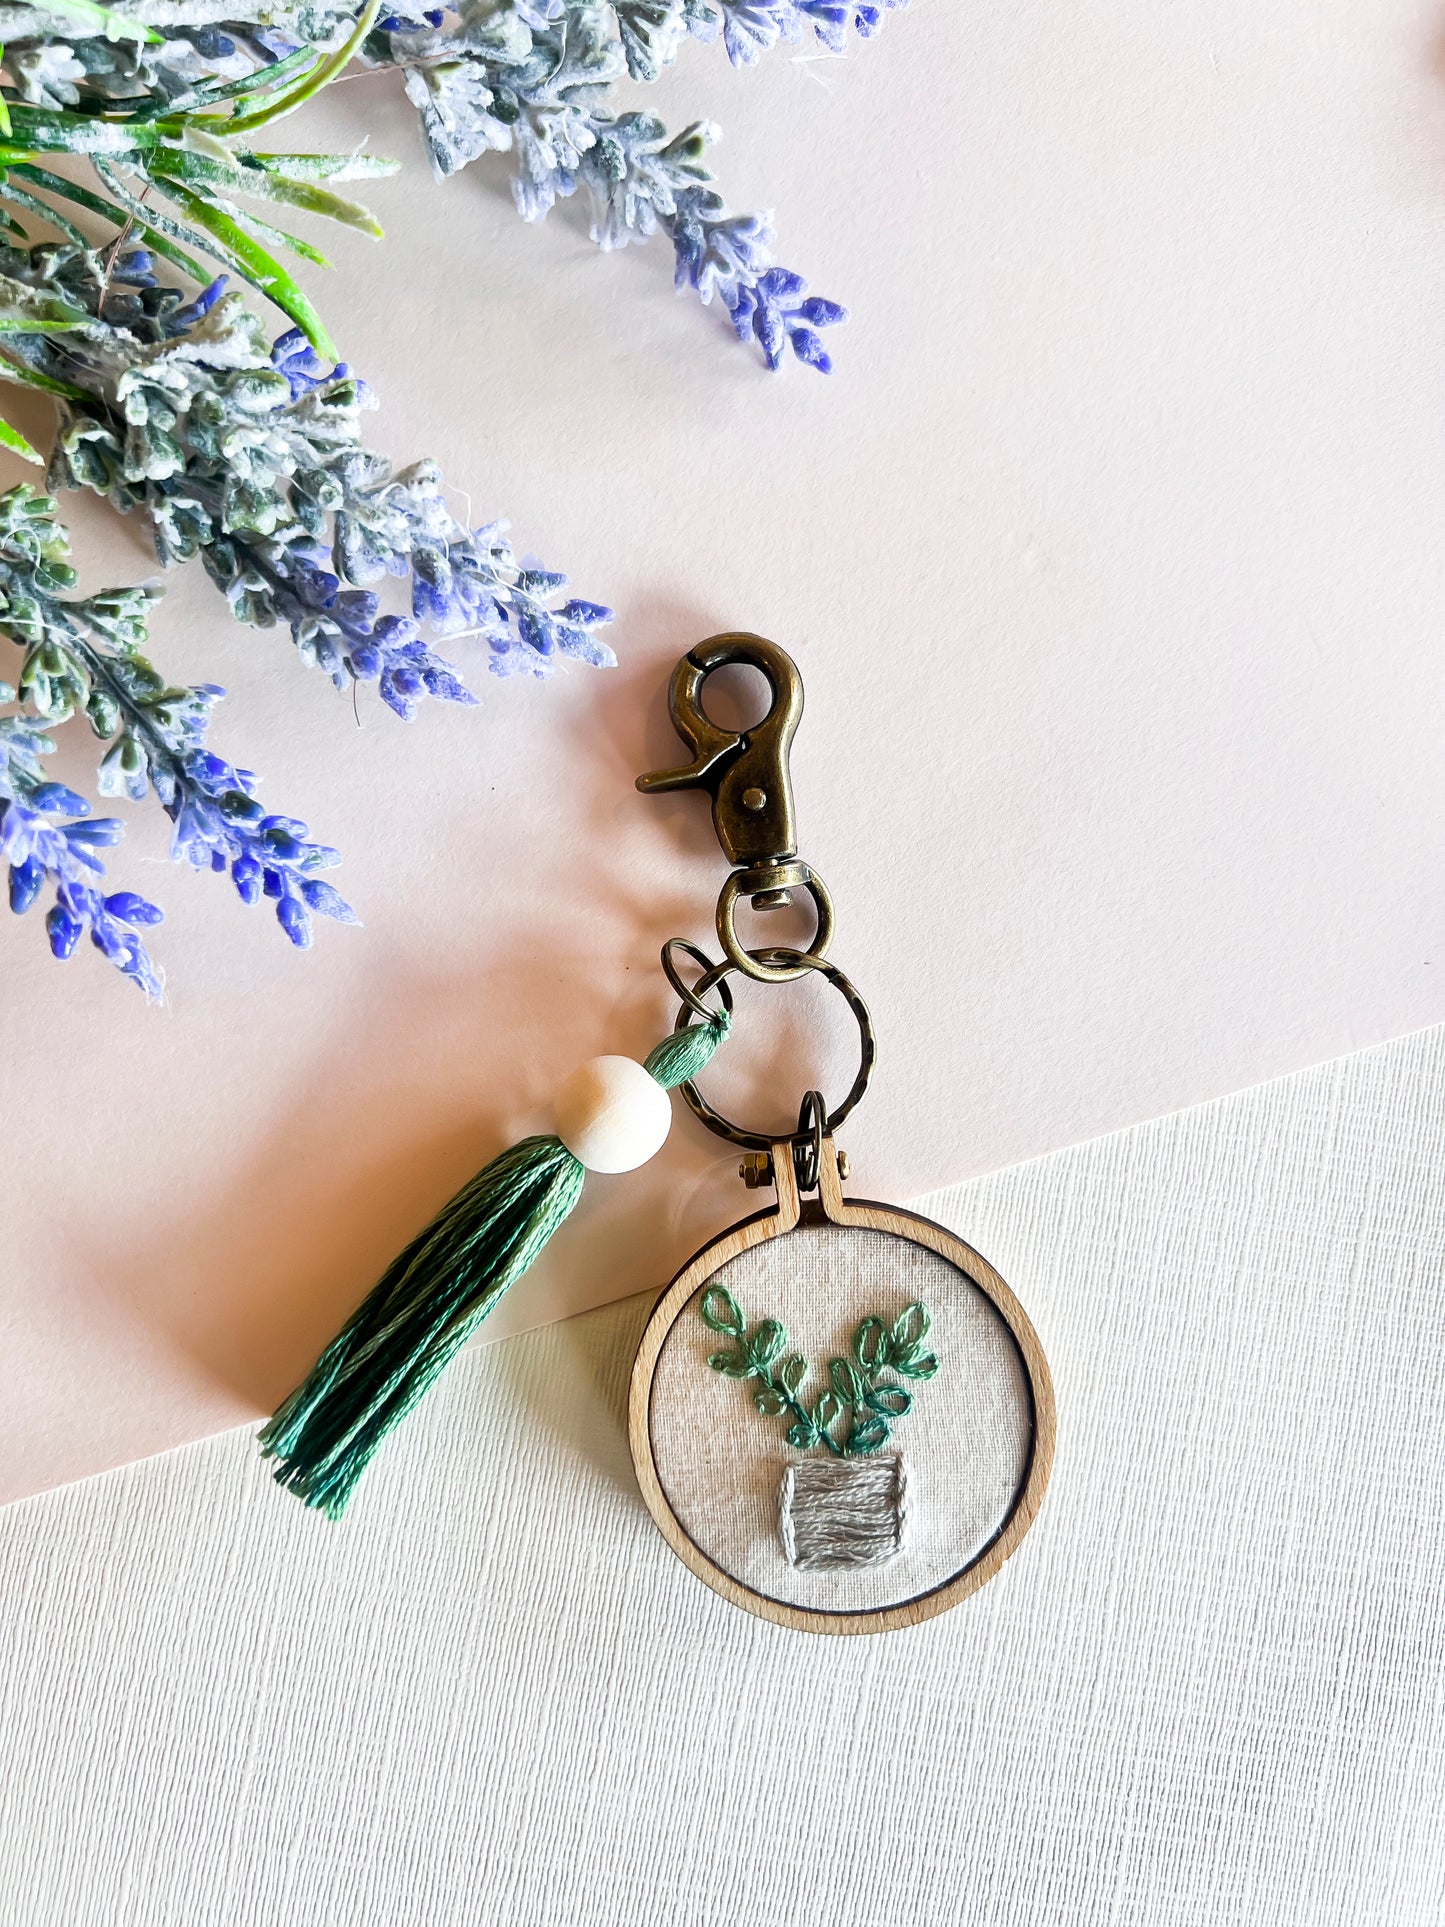 Hand Embroidered Floral Keychains | Handmade Flower Keychain | Boho Natural Wood Thread Tassel